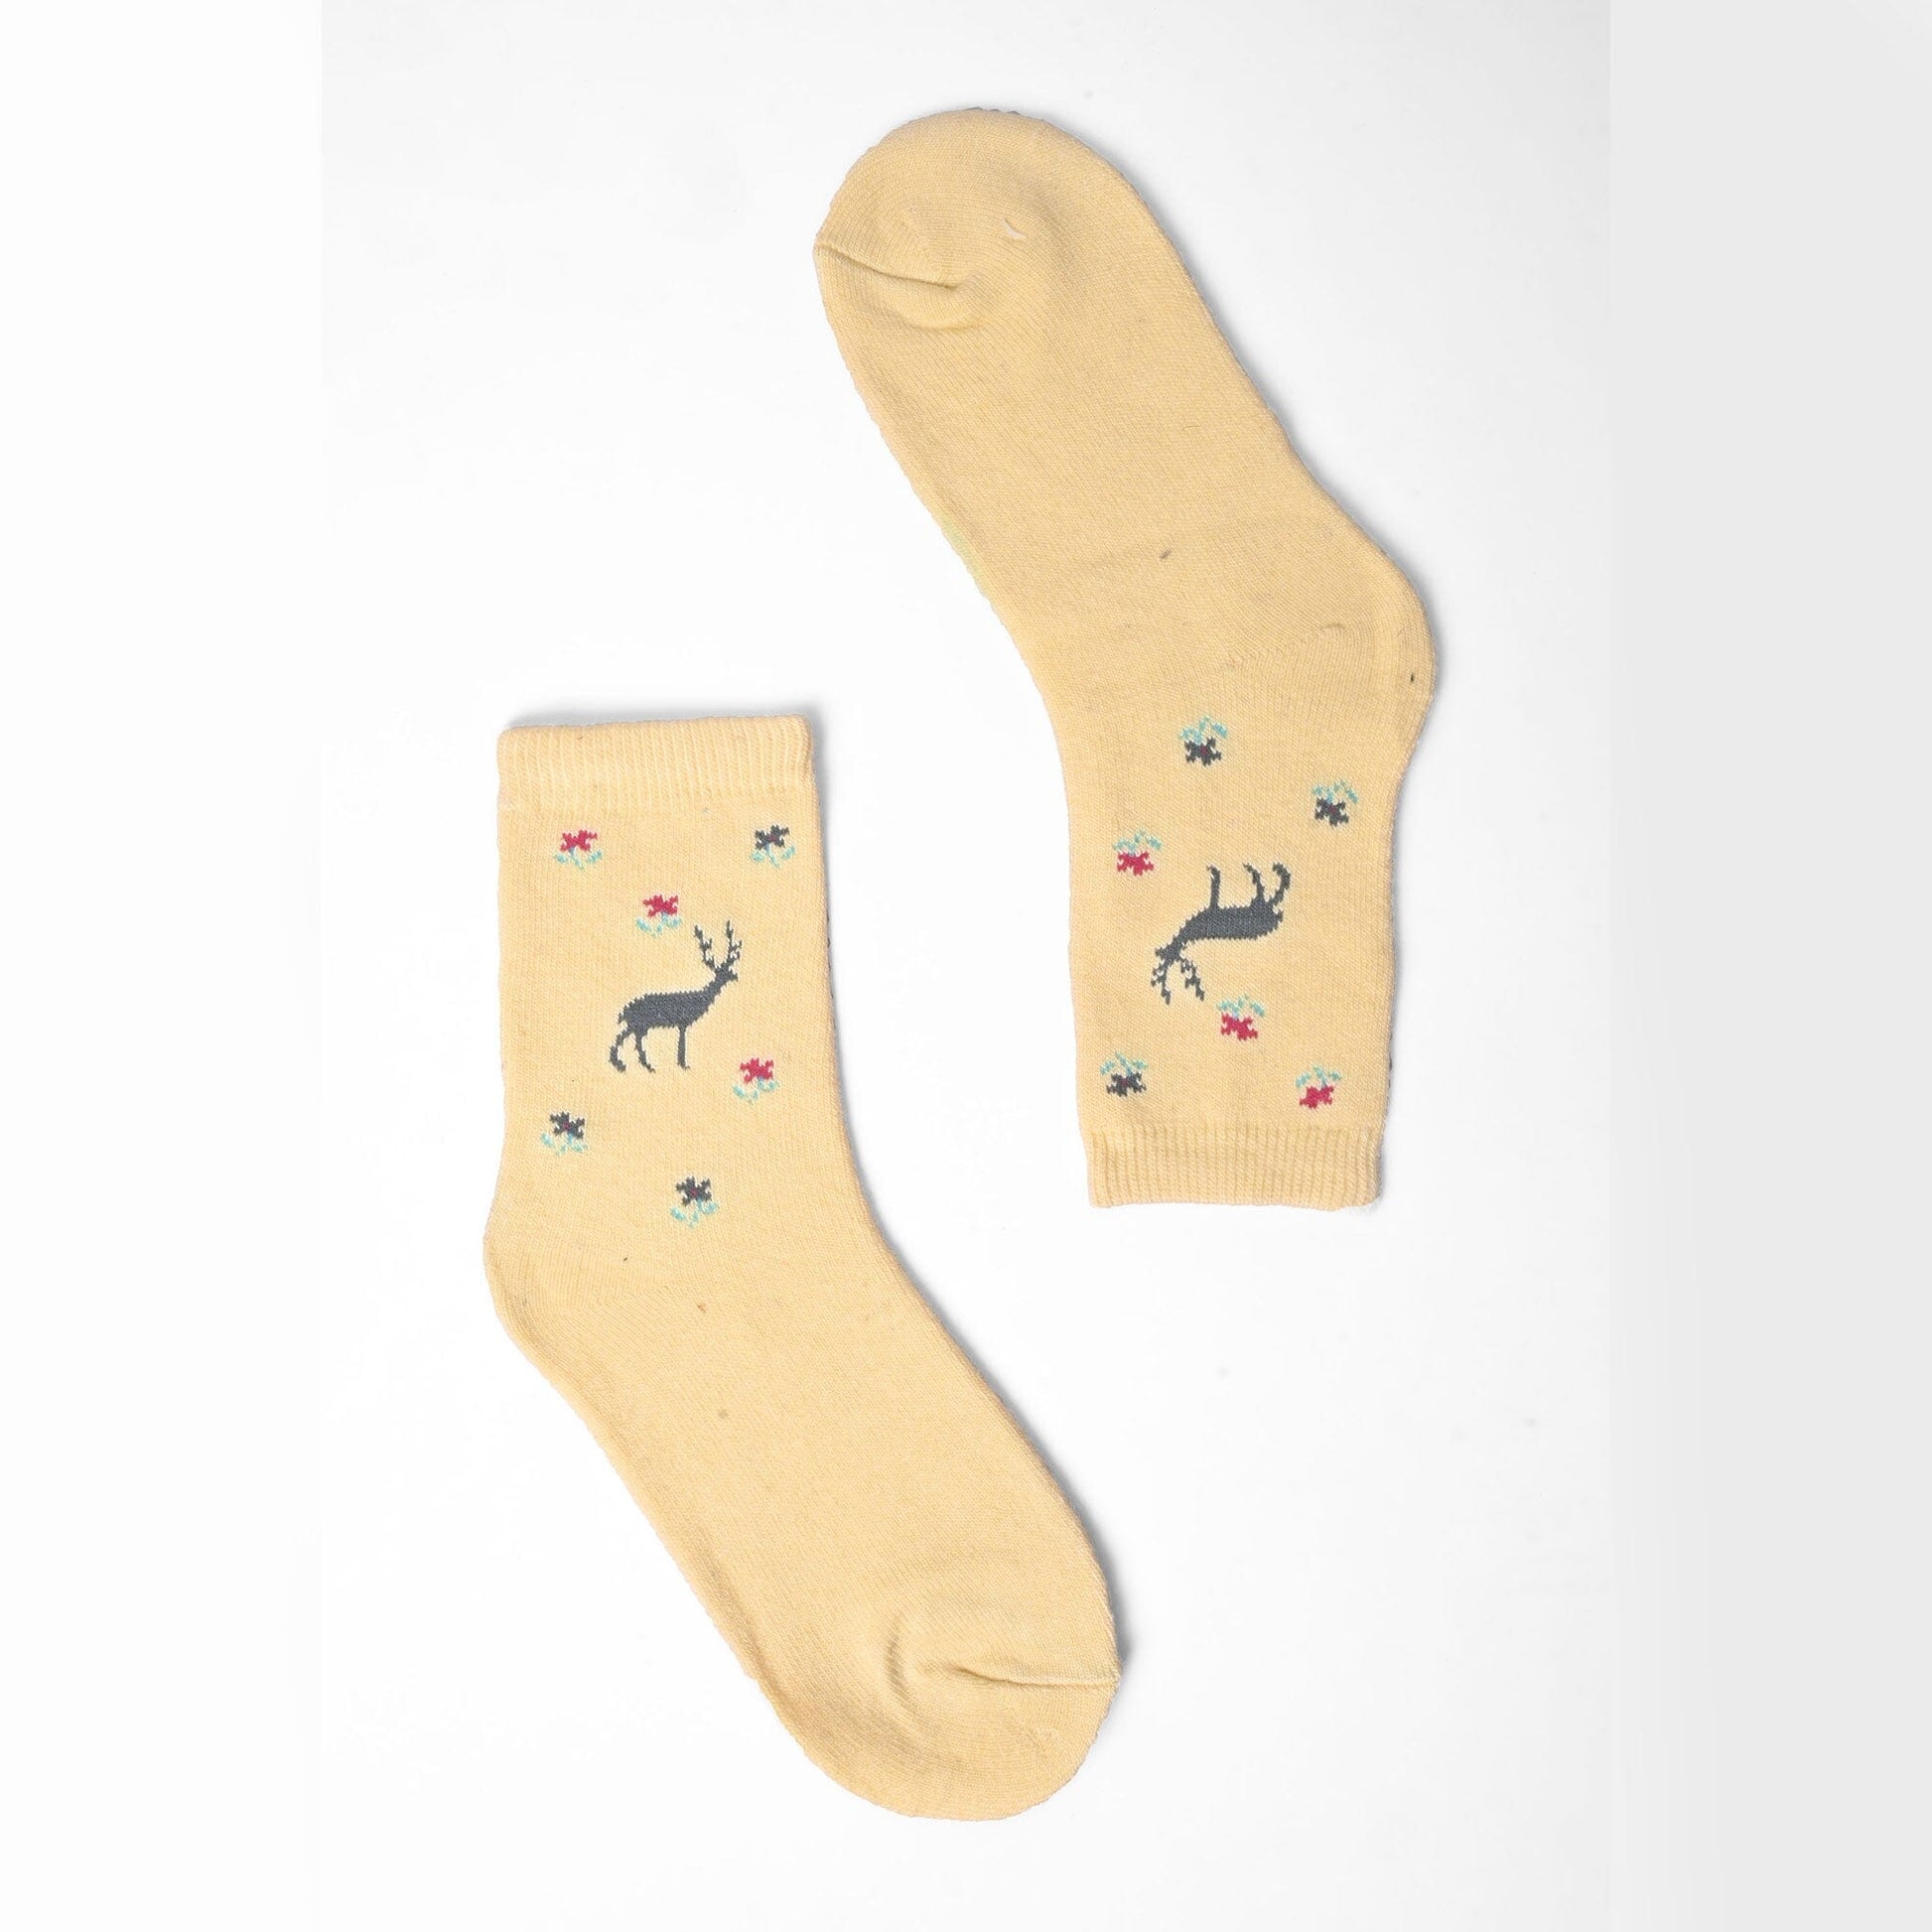 Tazoo Men's Deer Printed Crew Socks Socks SRL D5 EUR 36-41 